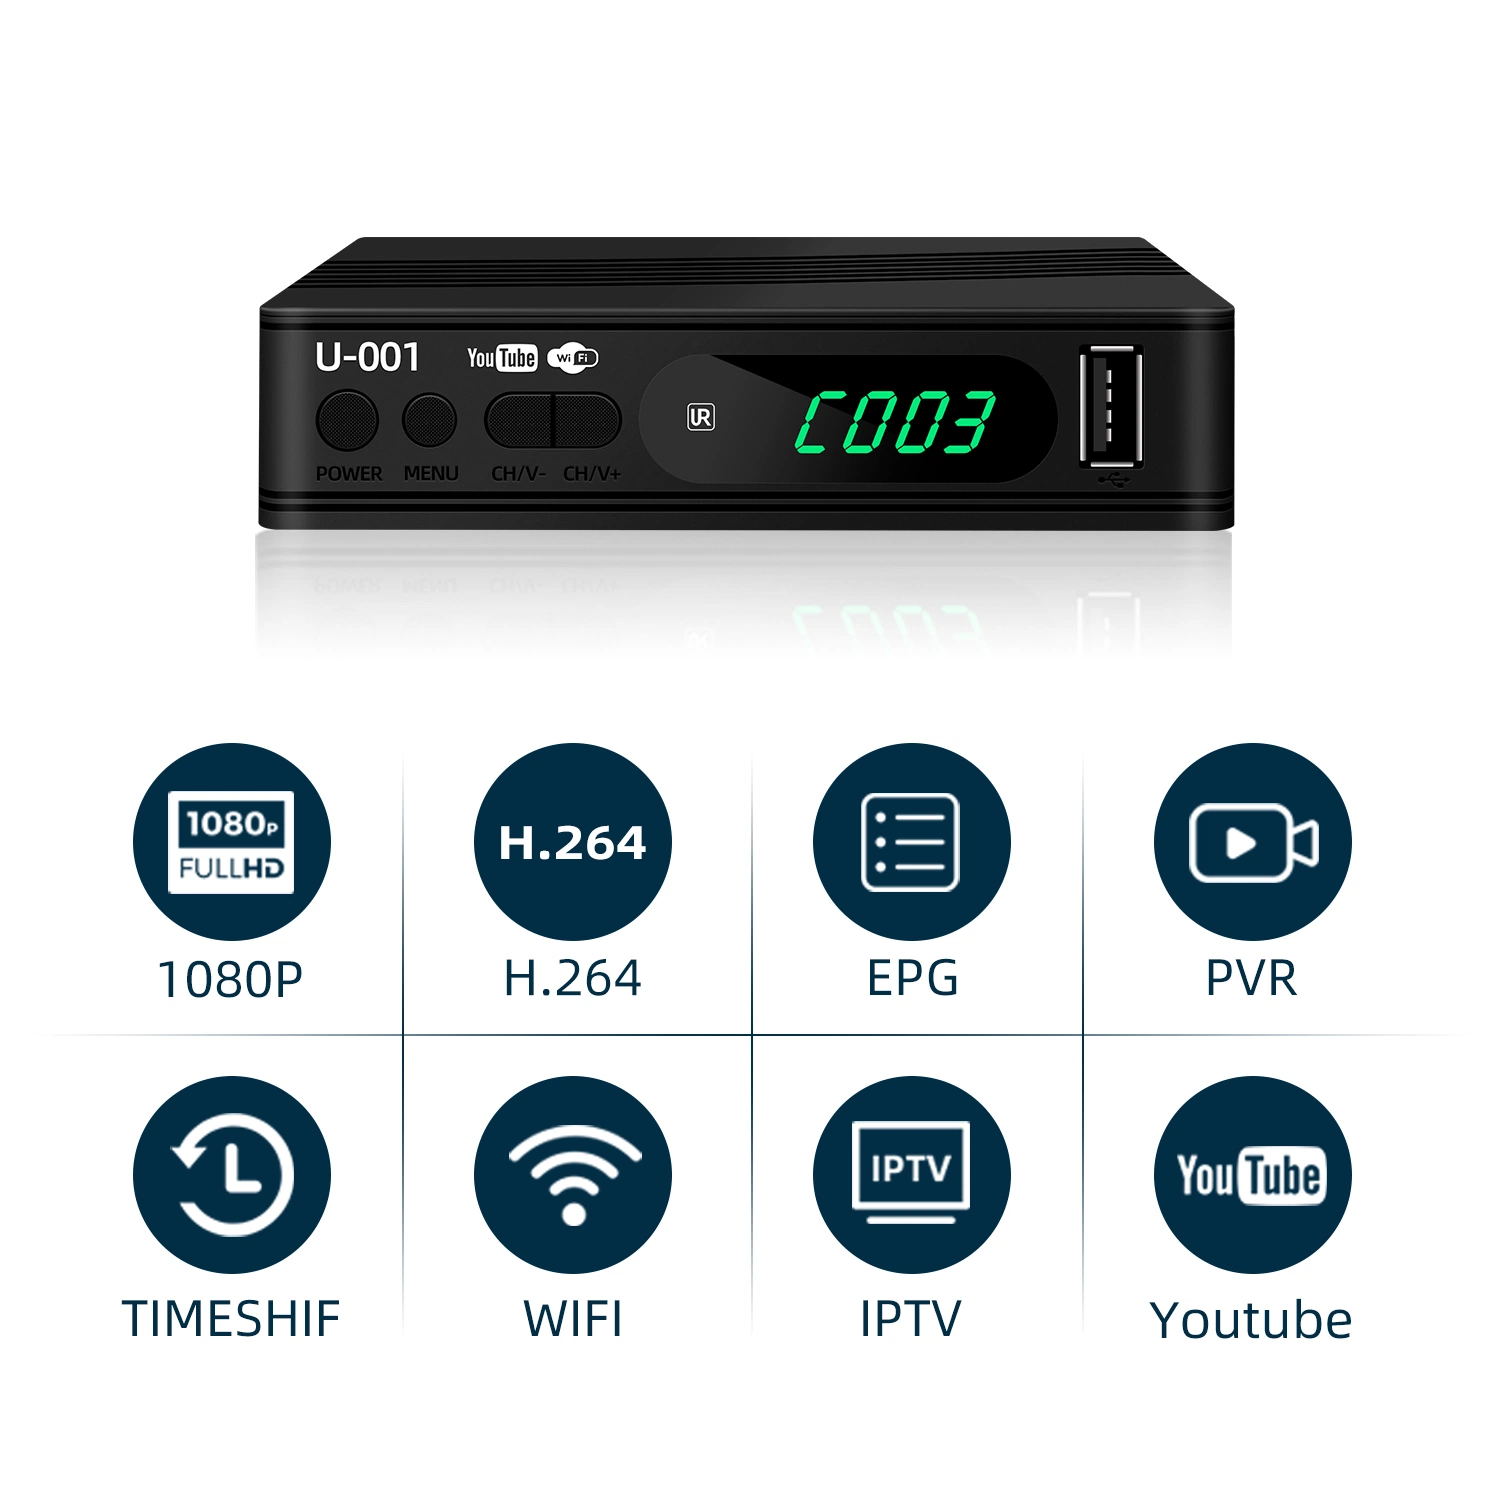 2020 producto caliente IPTV WiFi DVB-T2 receptor de TV digital